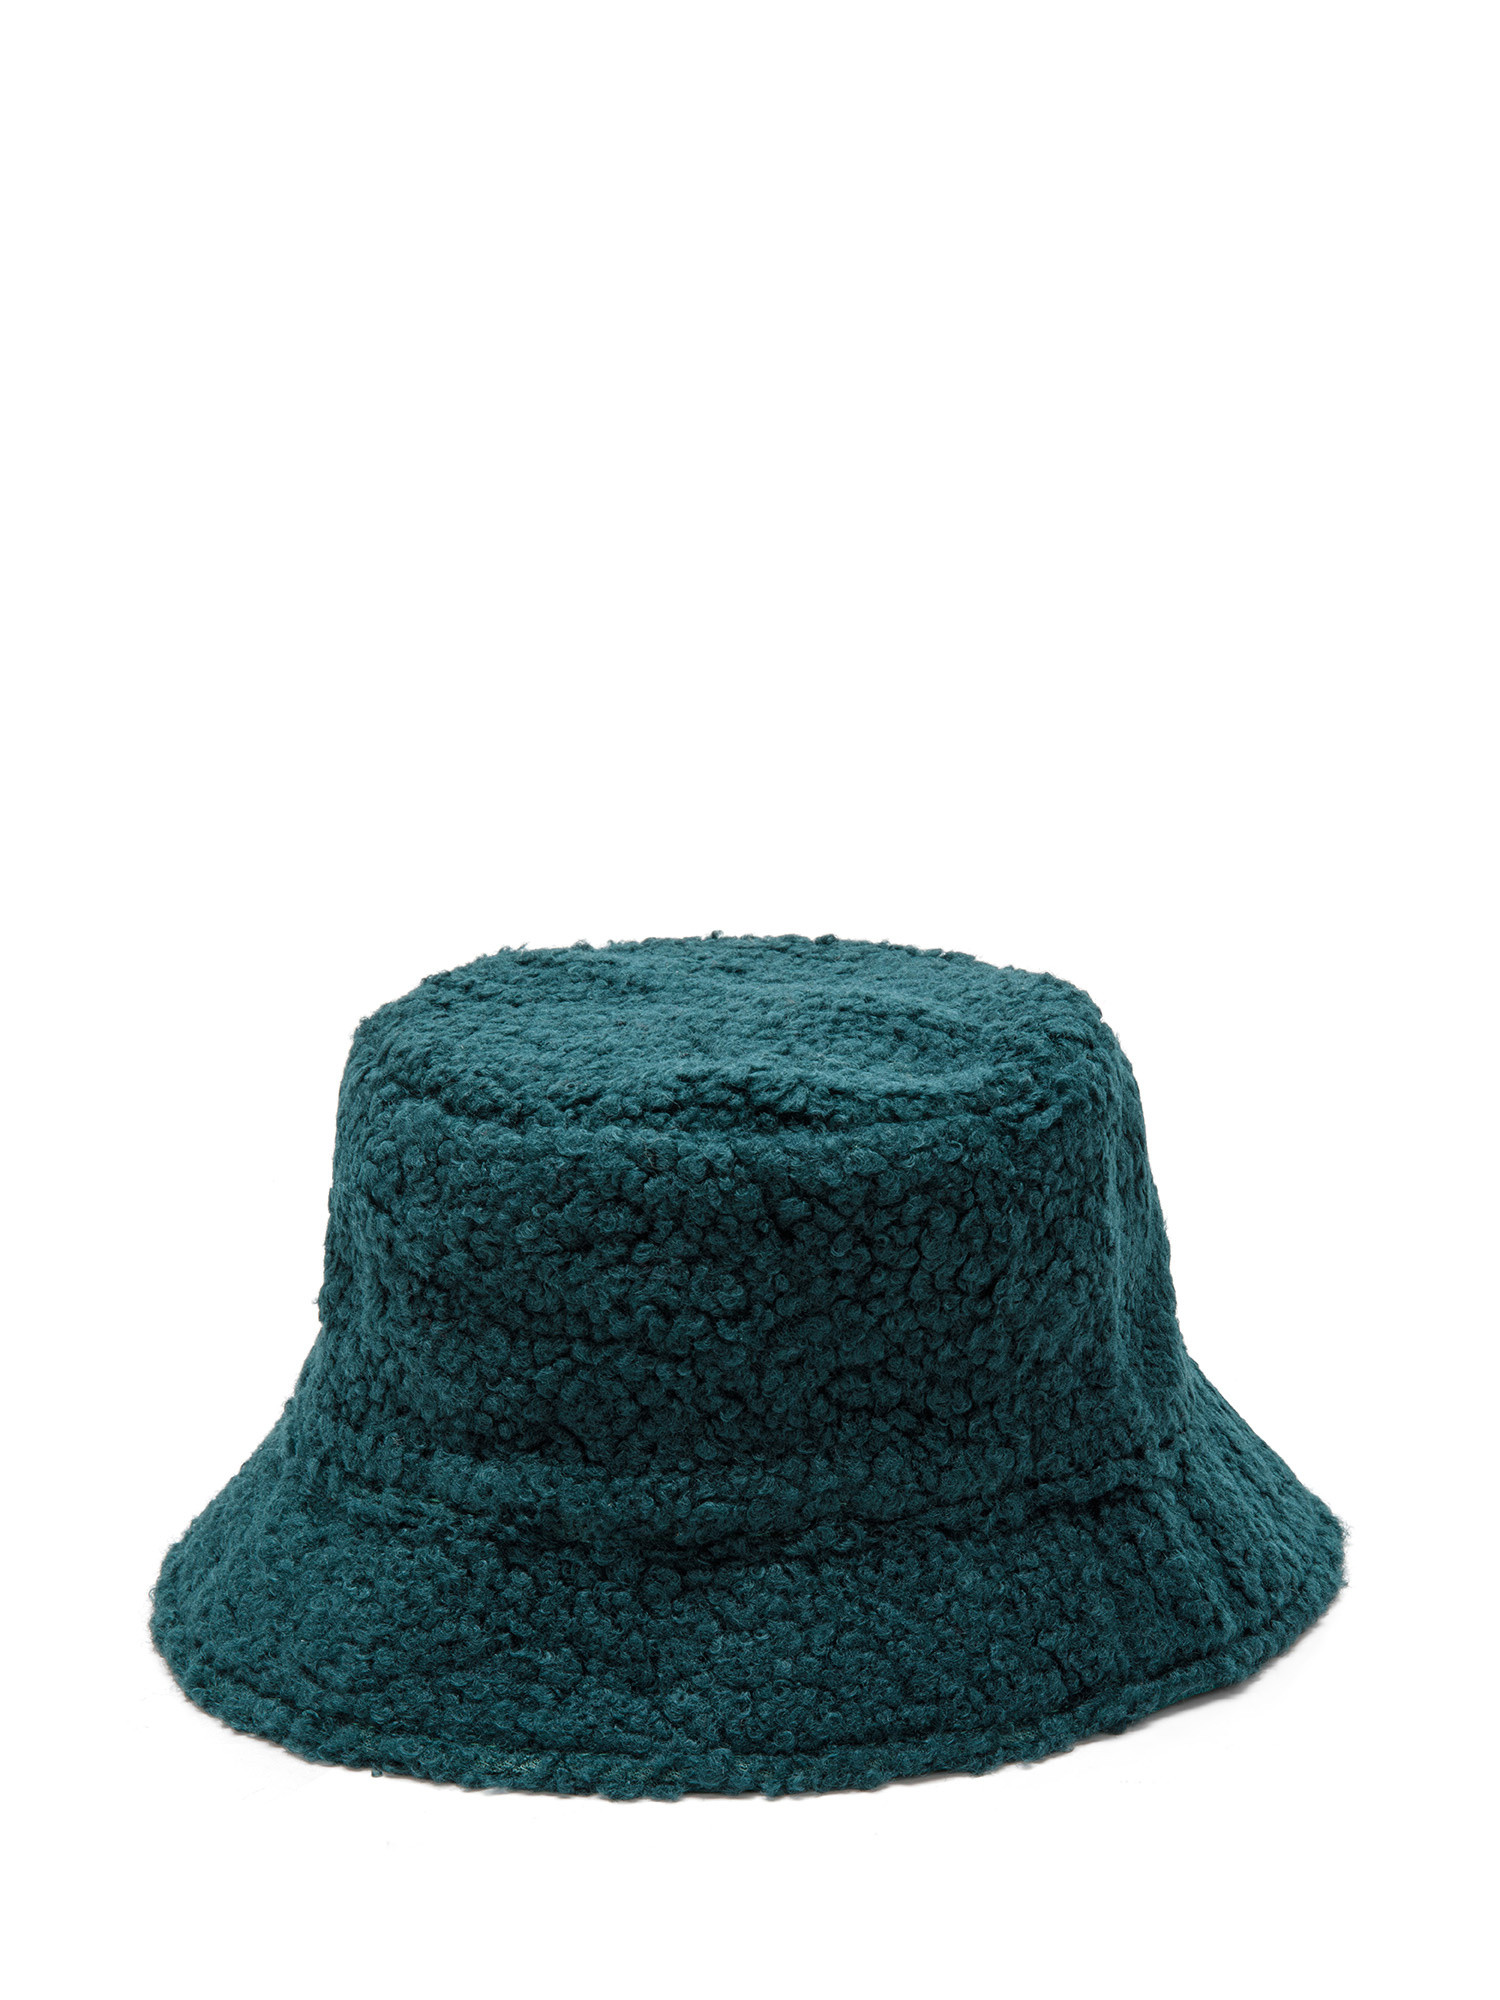 Koan - Teddy Bear Hat, Green, large image number 0